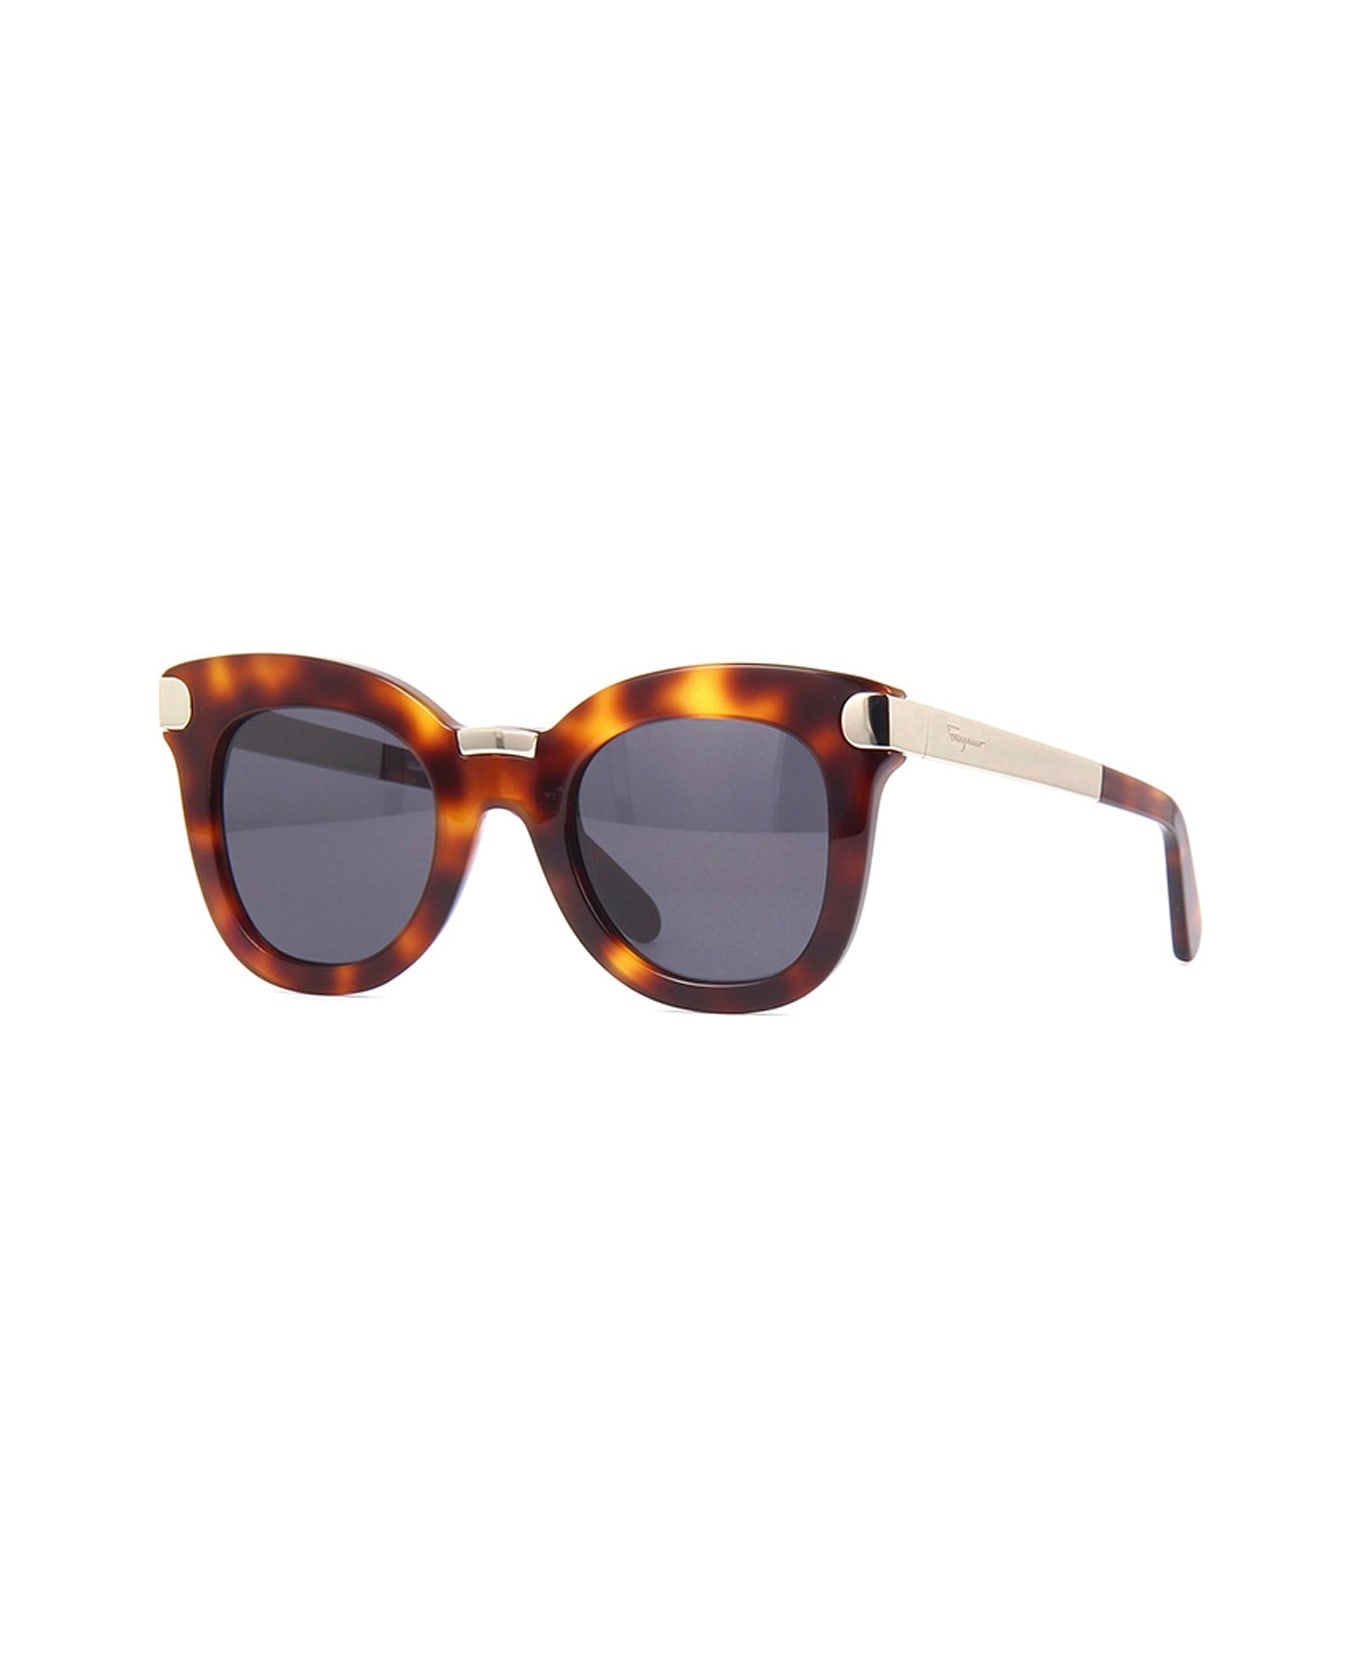 Salvatore Ferragamo Eyewear Sf967s Sunglasses - Marrone